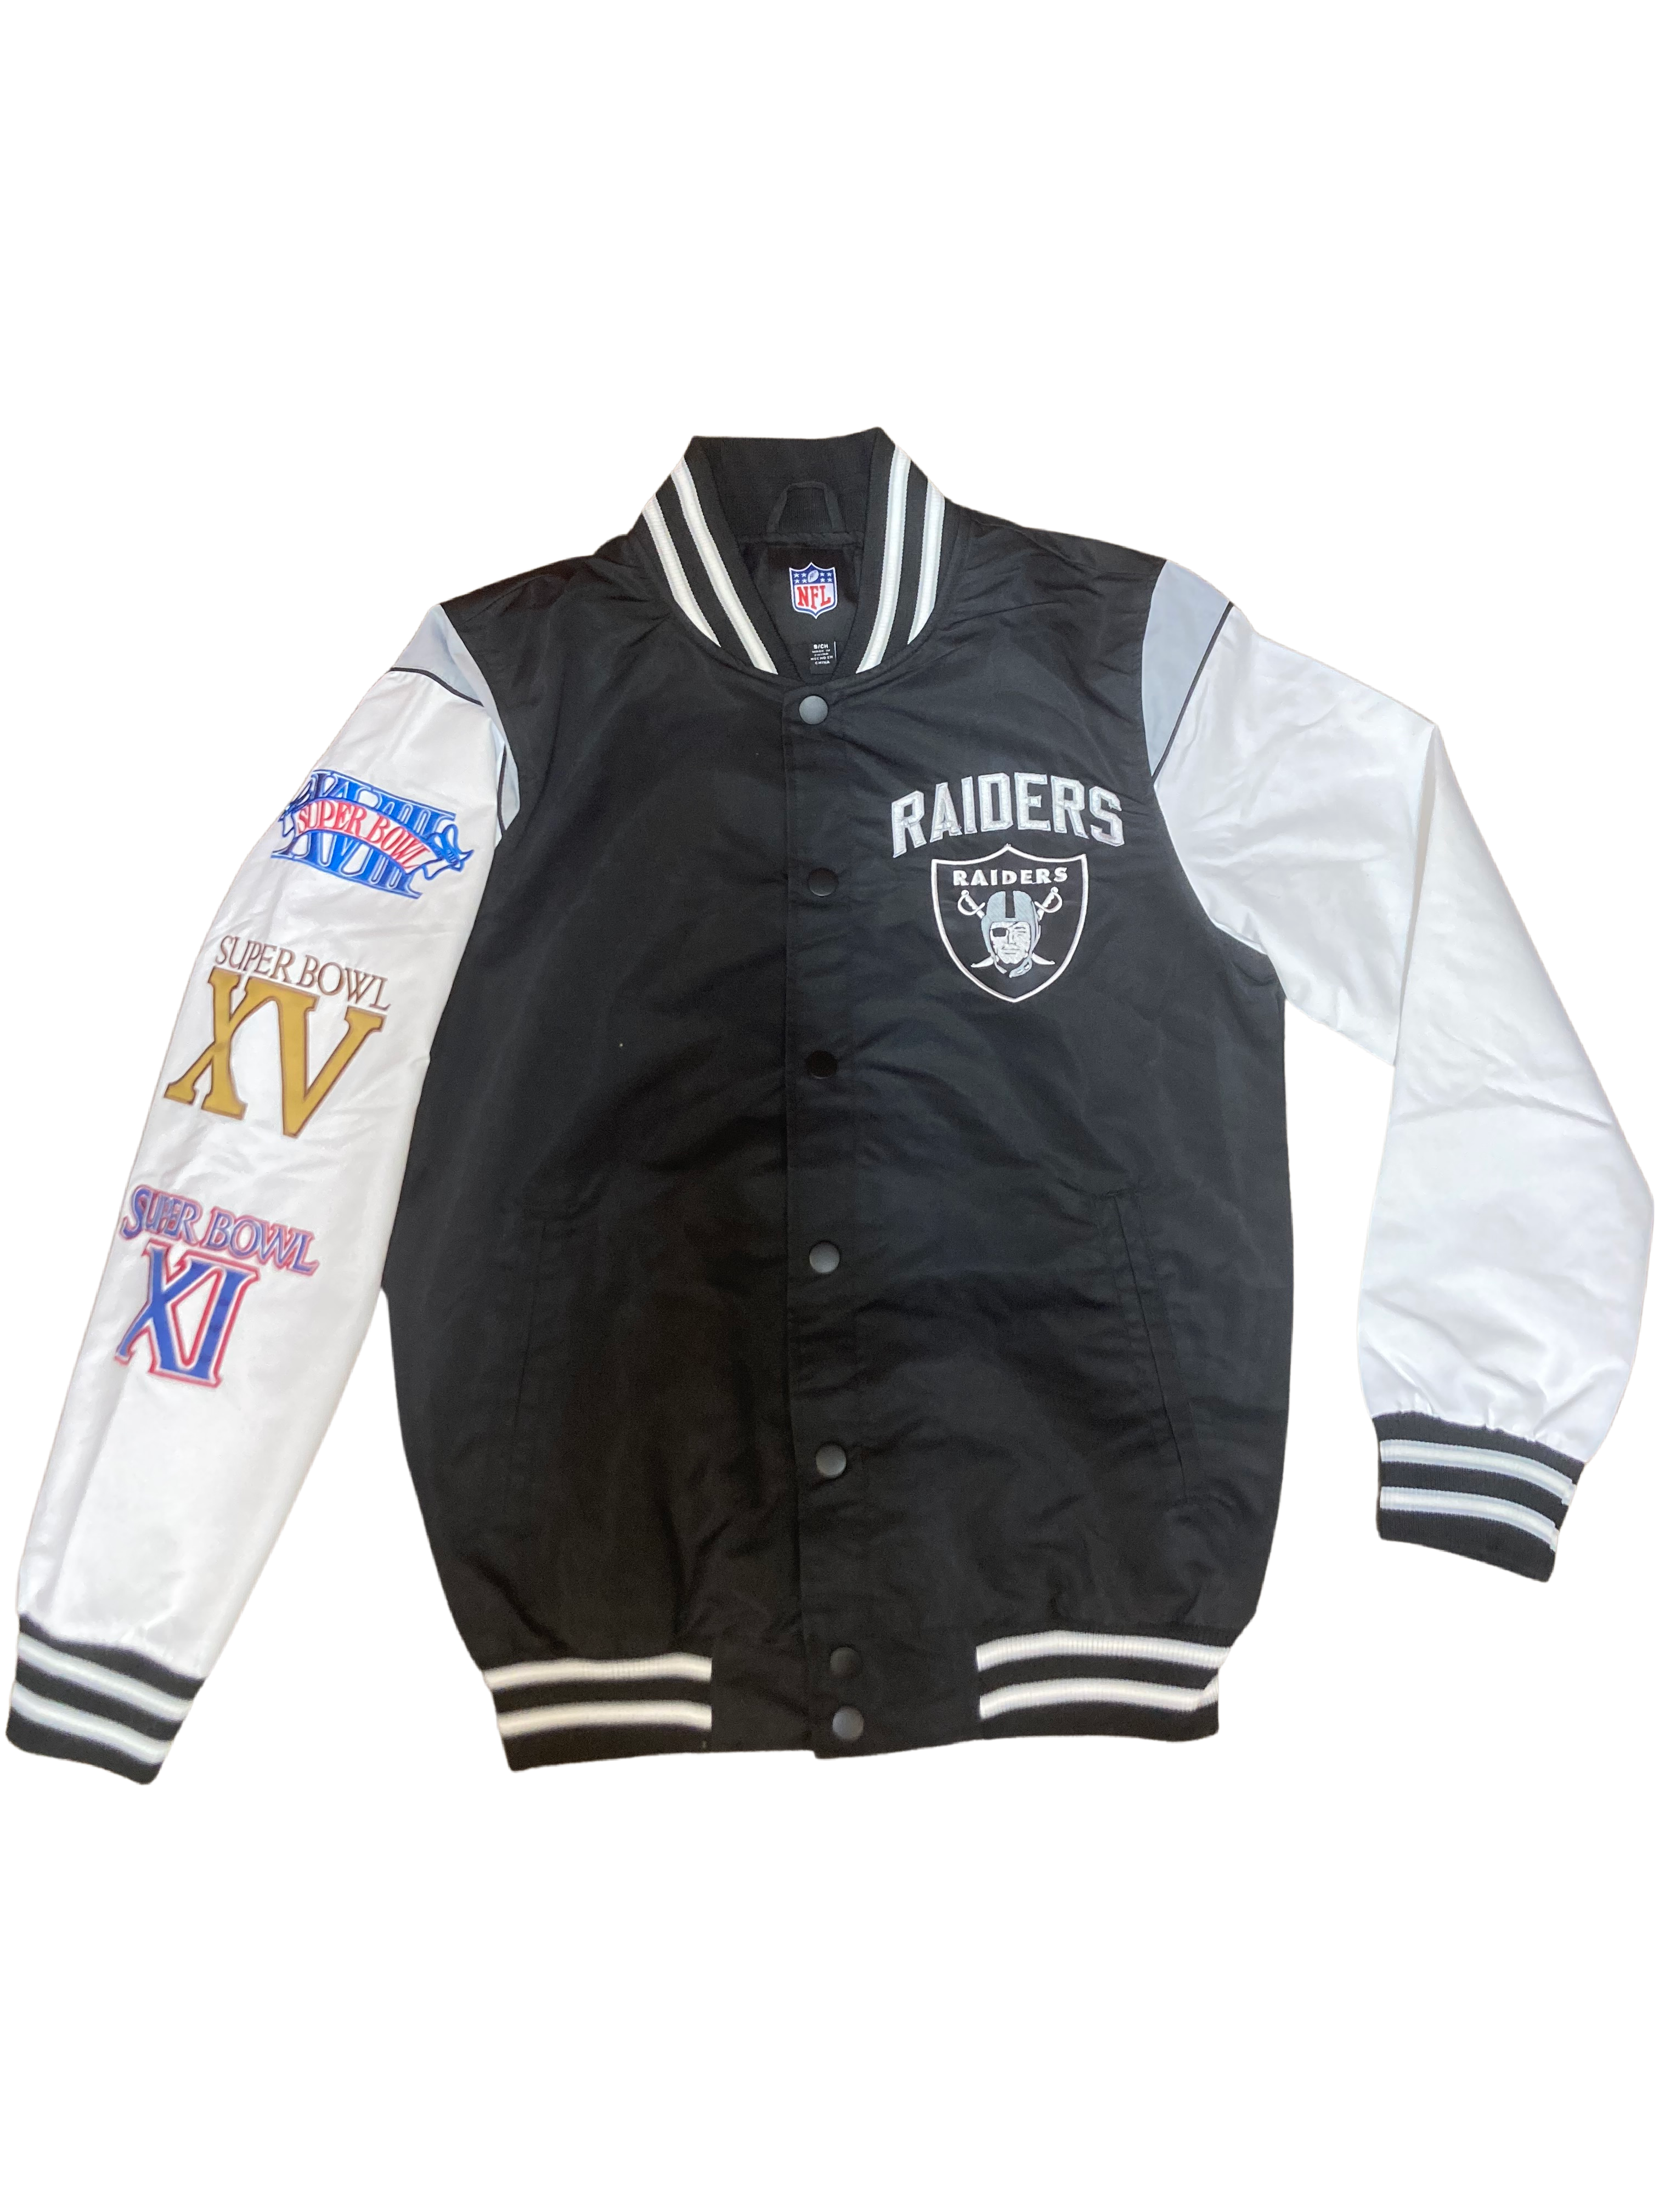 GIII Sports - Oakland Raiders Complete Game Commemorative Jacket